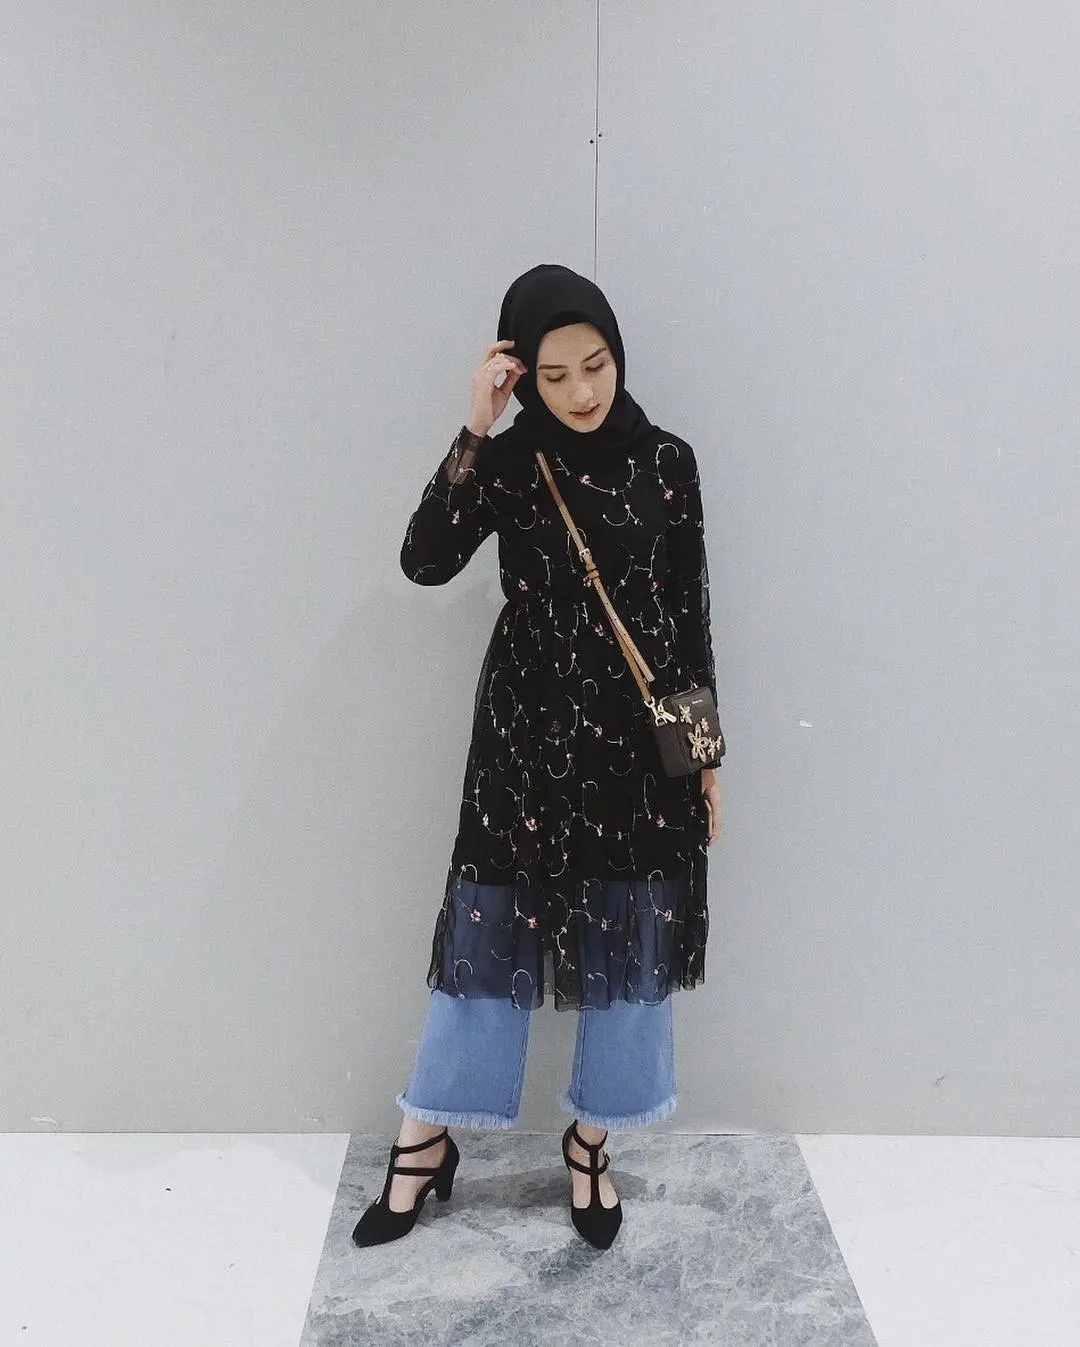 Mix and match busana hijab yang unik dan simple. (sumber foto: @dwihandaanda/instagram)